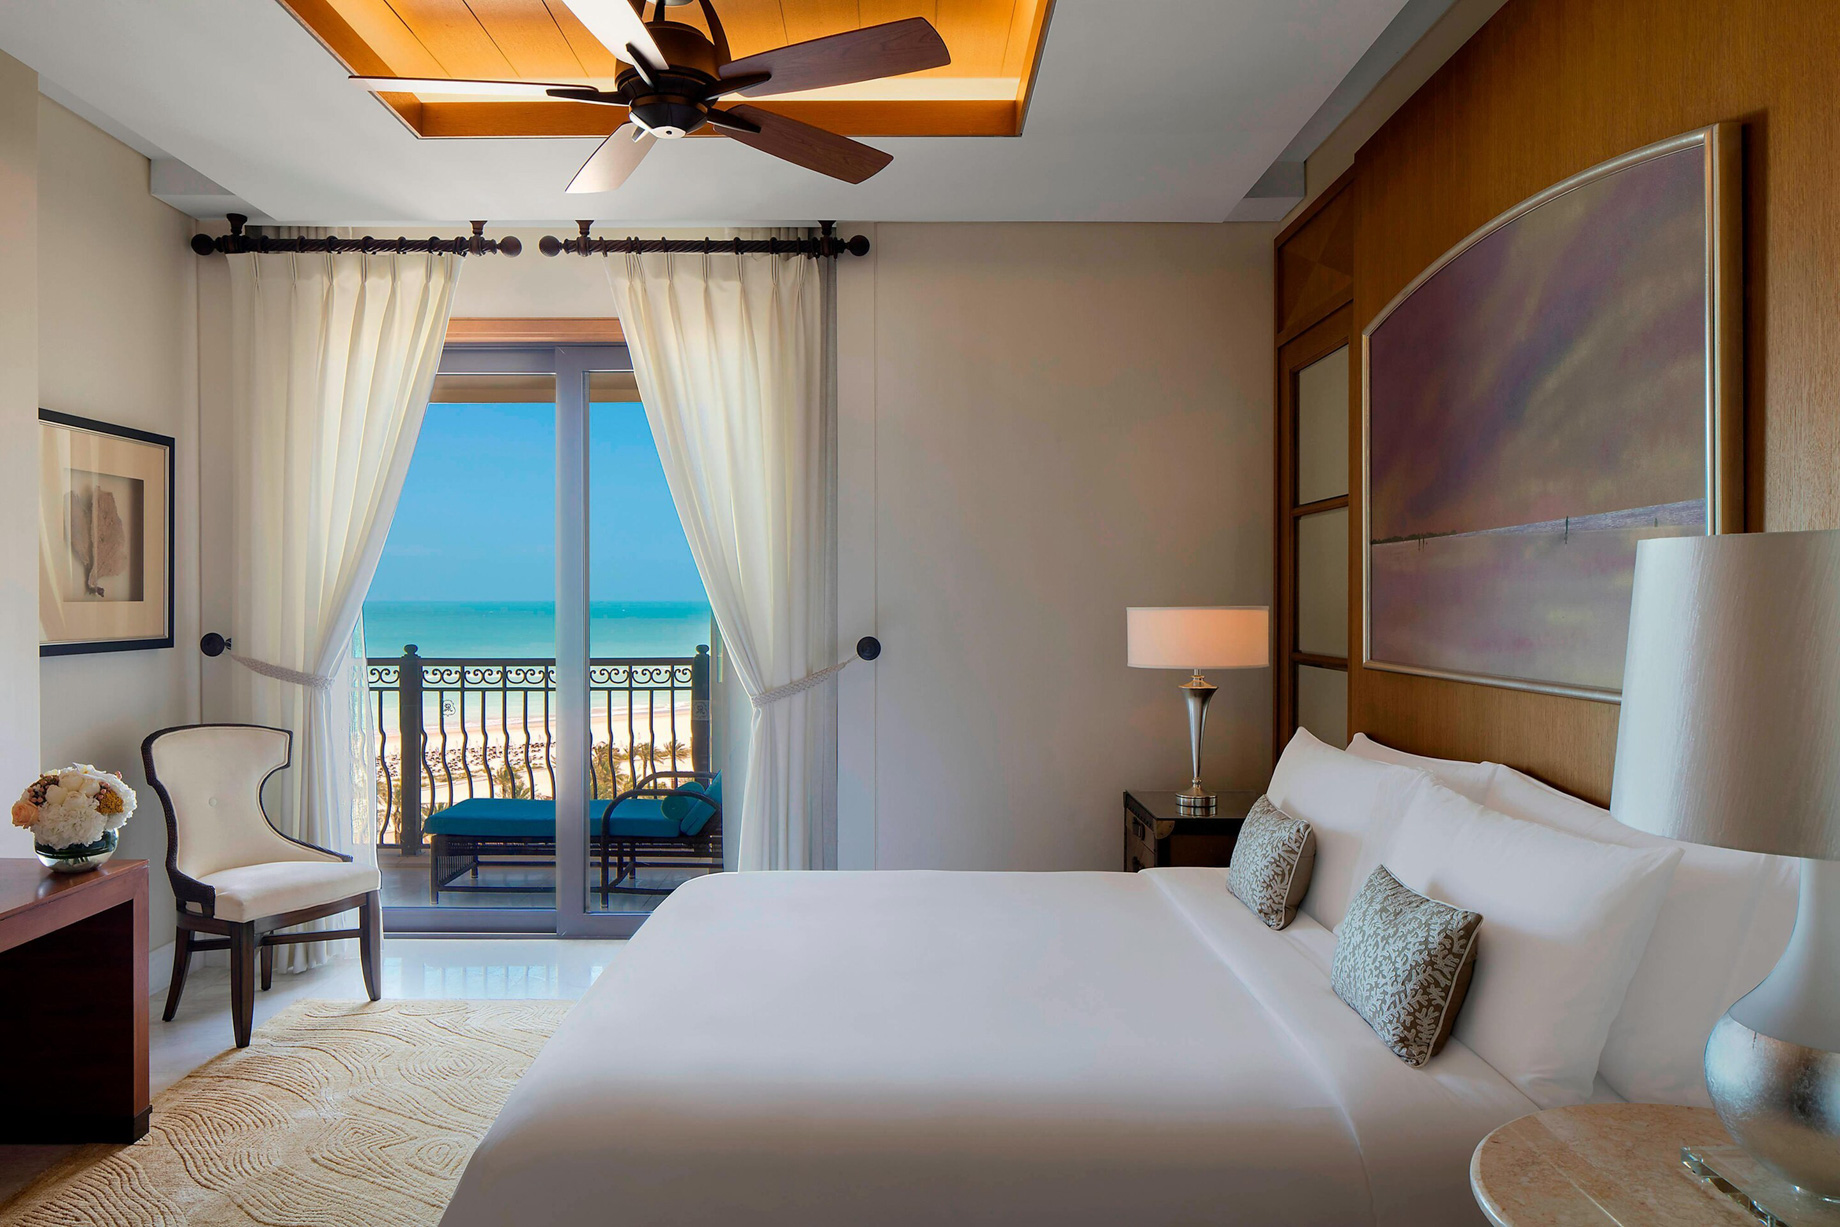 The St. Regis Saadiyat Island Resort - Abu Dhabi, UAE - Astor Suite Bedroom